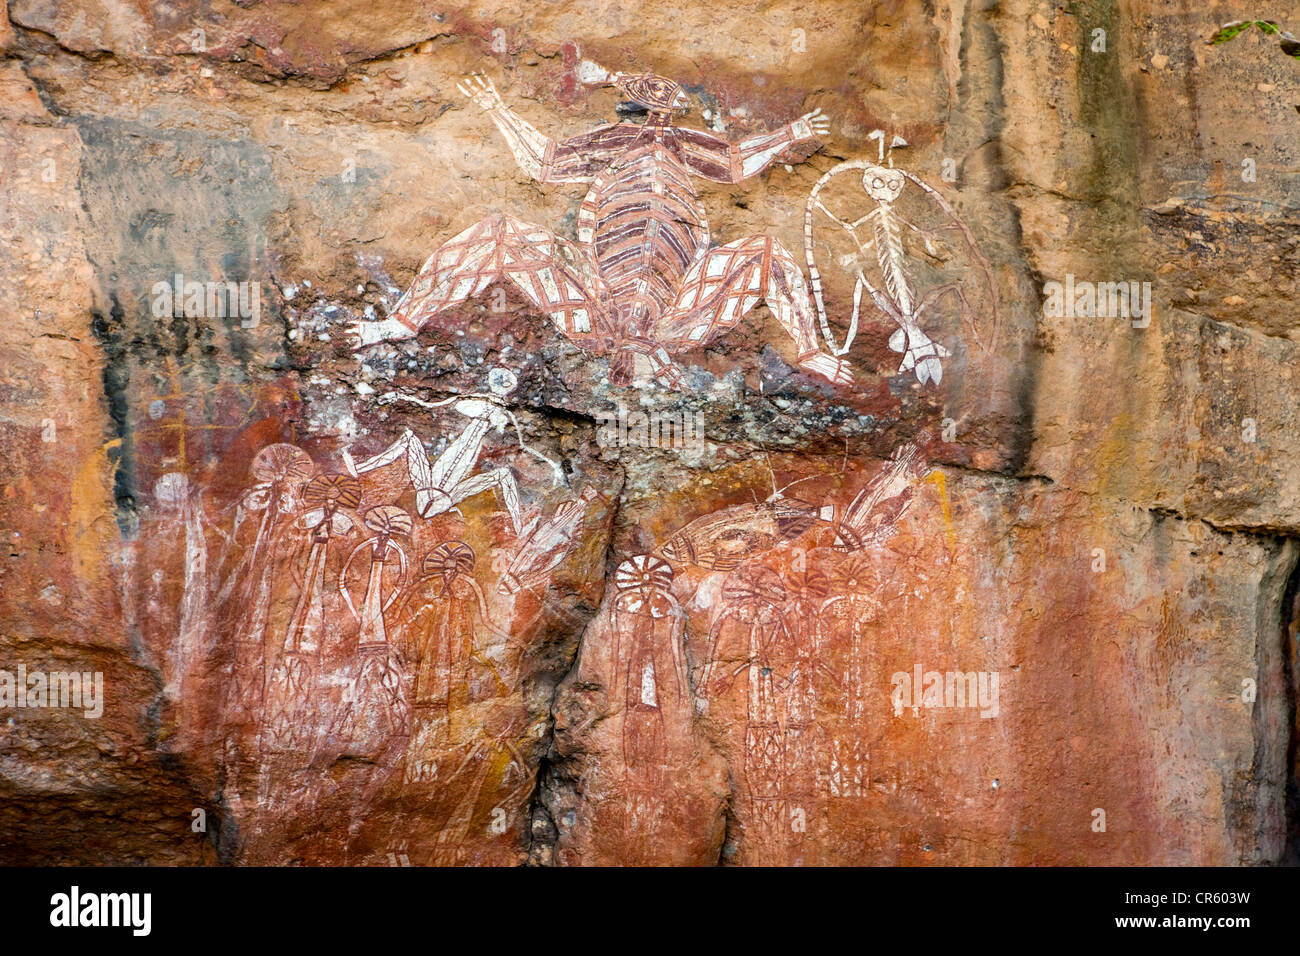 Aboriginal rock carvings, Lightning Man, Nourlangie Rock, Kakadu National Park, Northern Territory, Australia Stock Photo